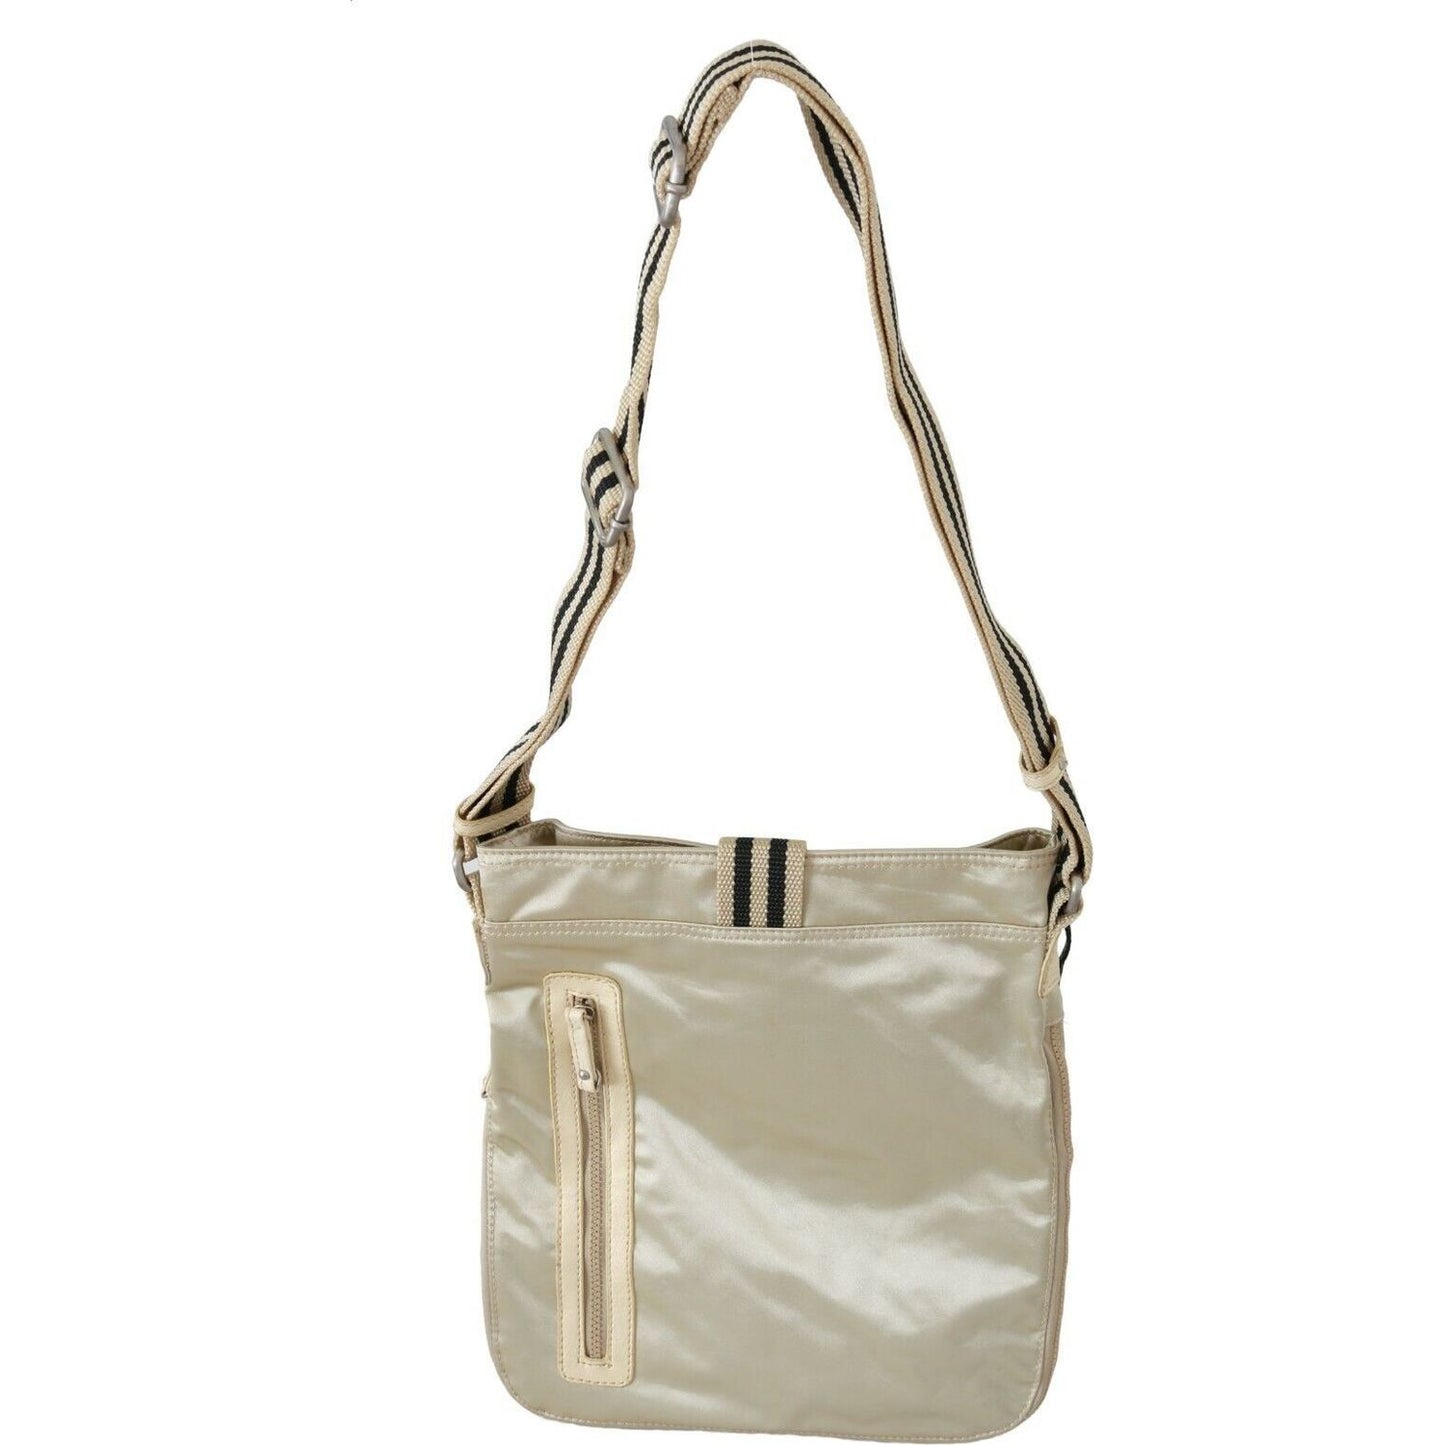 WAYFARER Chic Beige Fabric Handbag WOMAN TOTES beige-handbag-shoulder-tote-fabric-purse